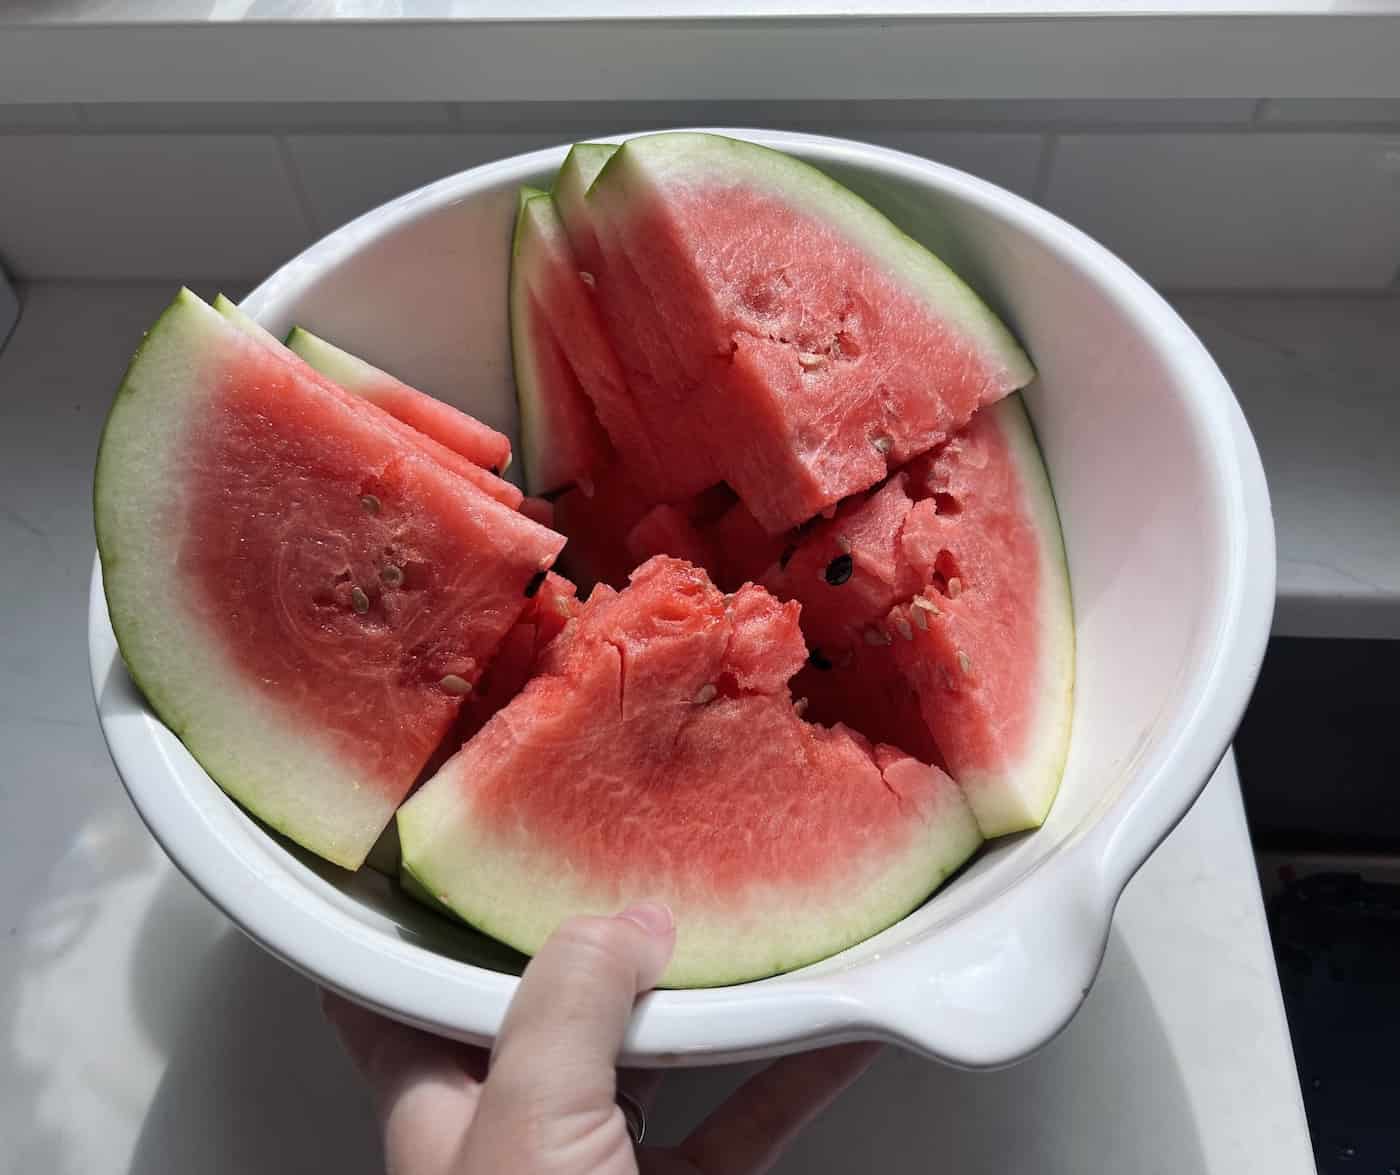 Cut up ripe watermelon slices